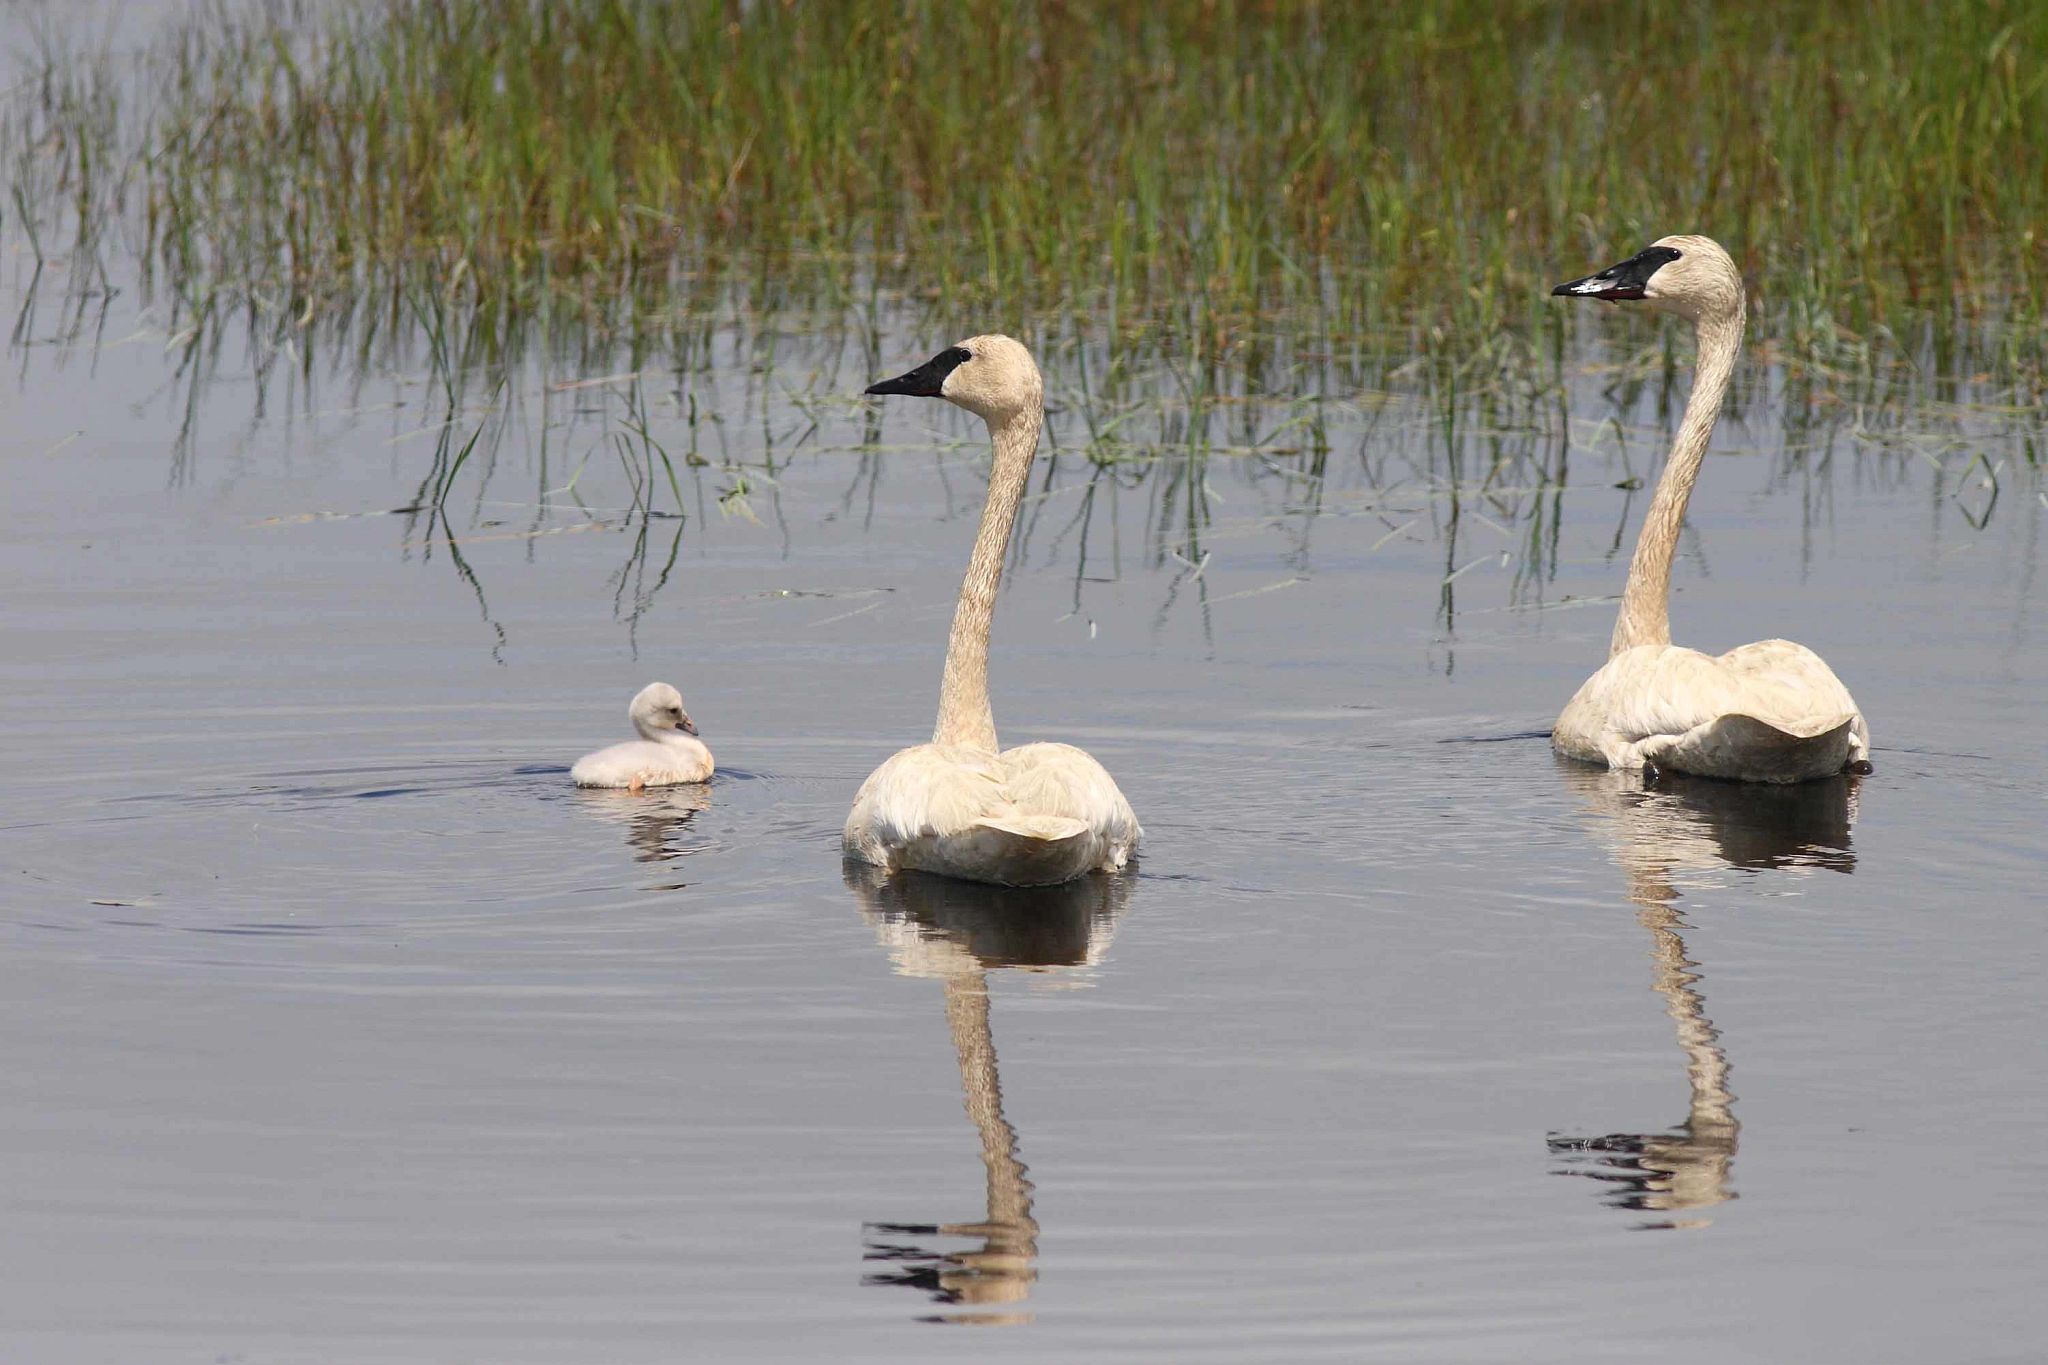 Three swans on a lake